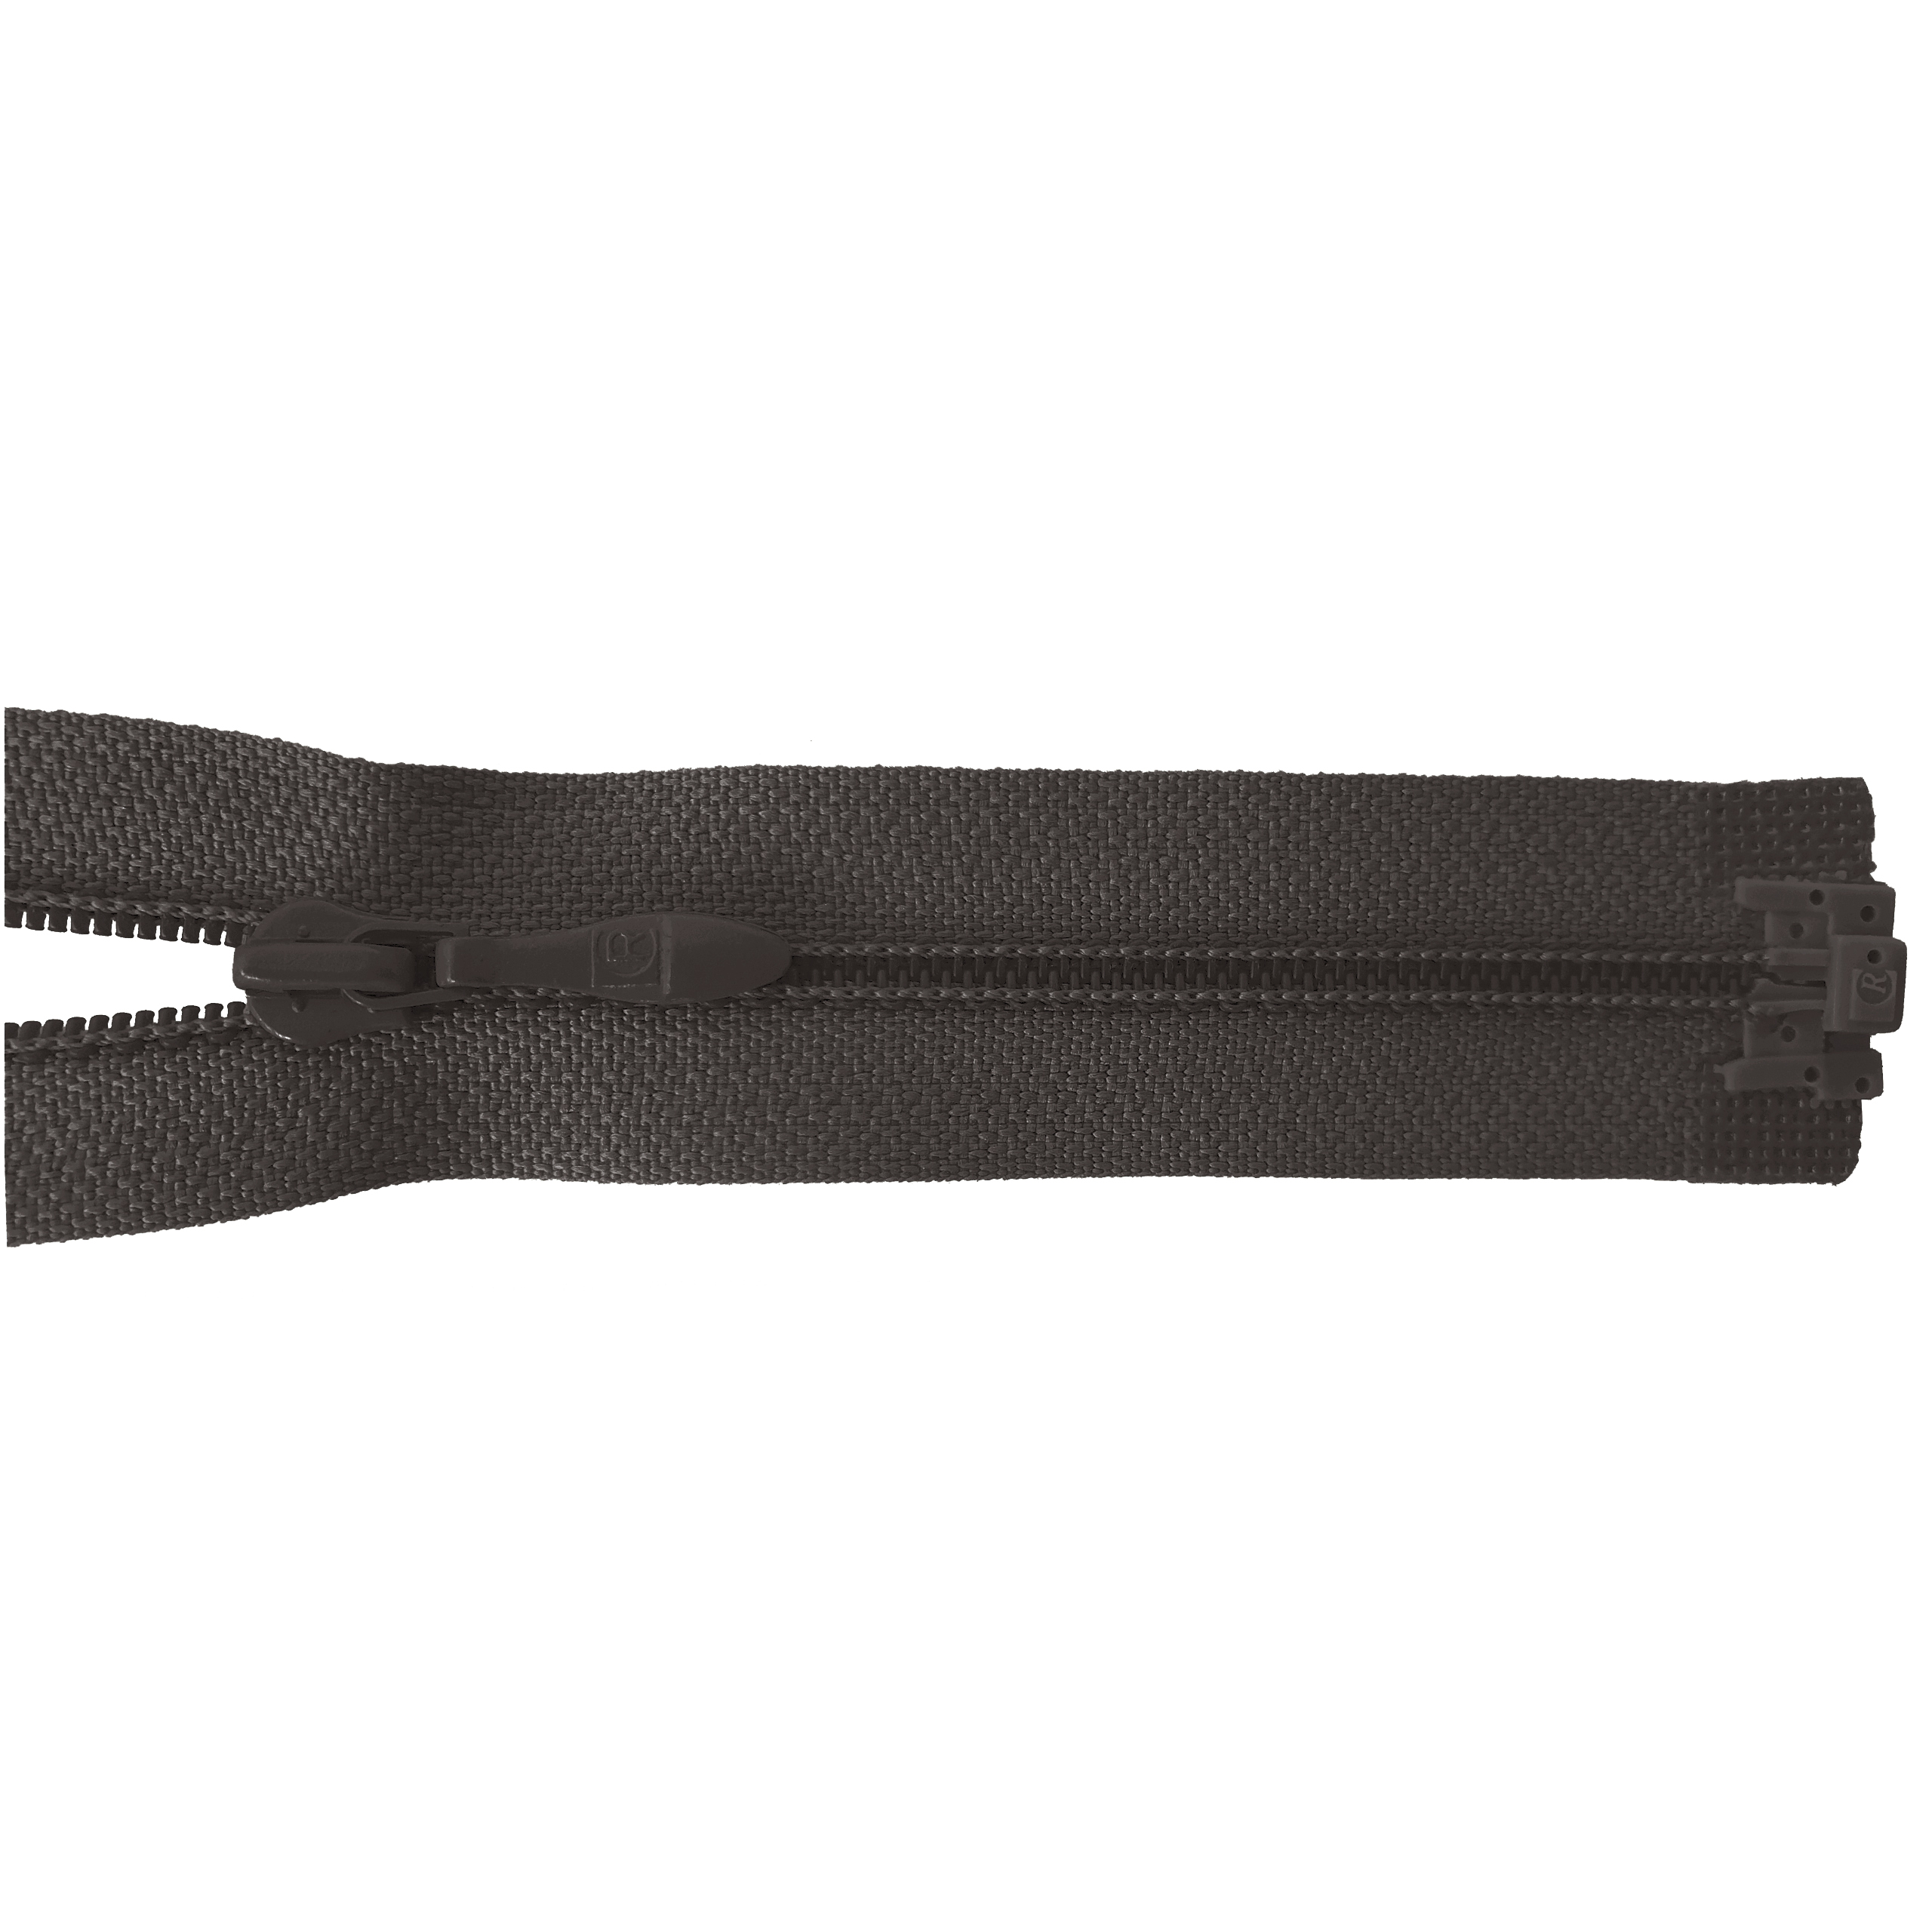 zipper 60cm,divisible, PES spiral, fein, dark brown grey